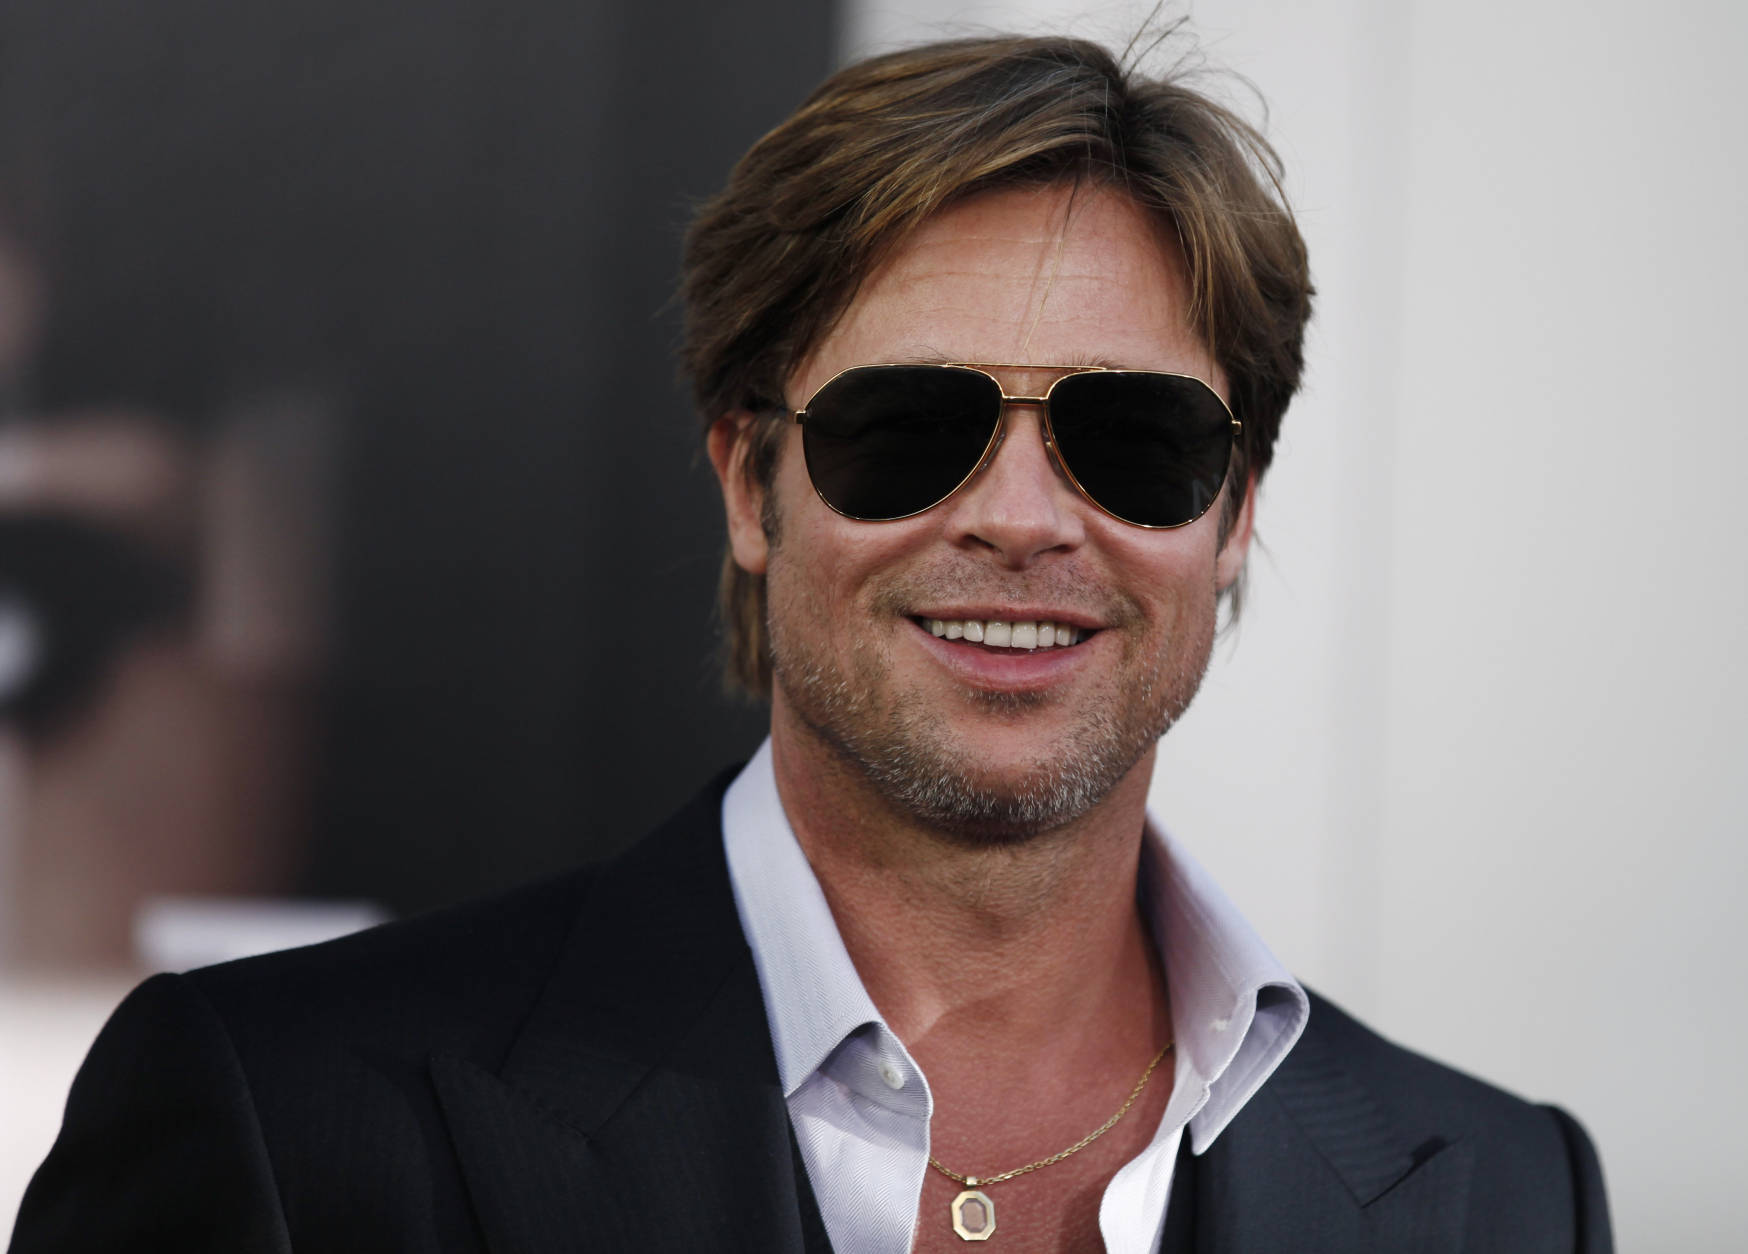 Actor Brad Pitt arrives at the premiere of "Salt" in Los Angeles, on Monday, July 19, 2010.  (AP Photo/Matt Sayles)